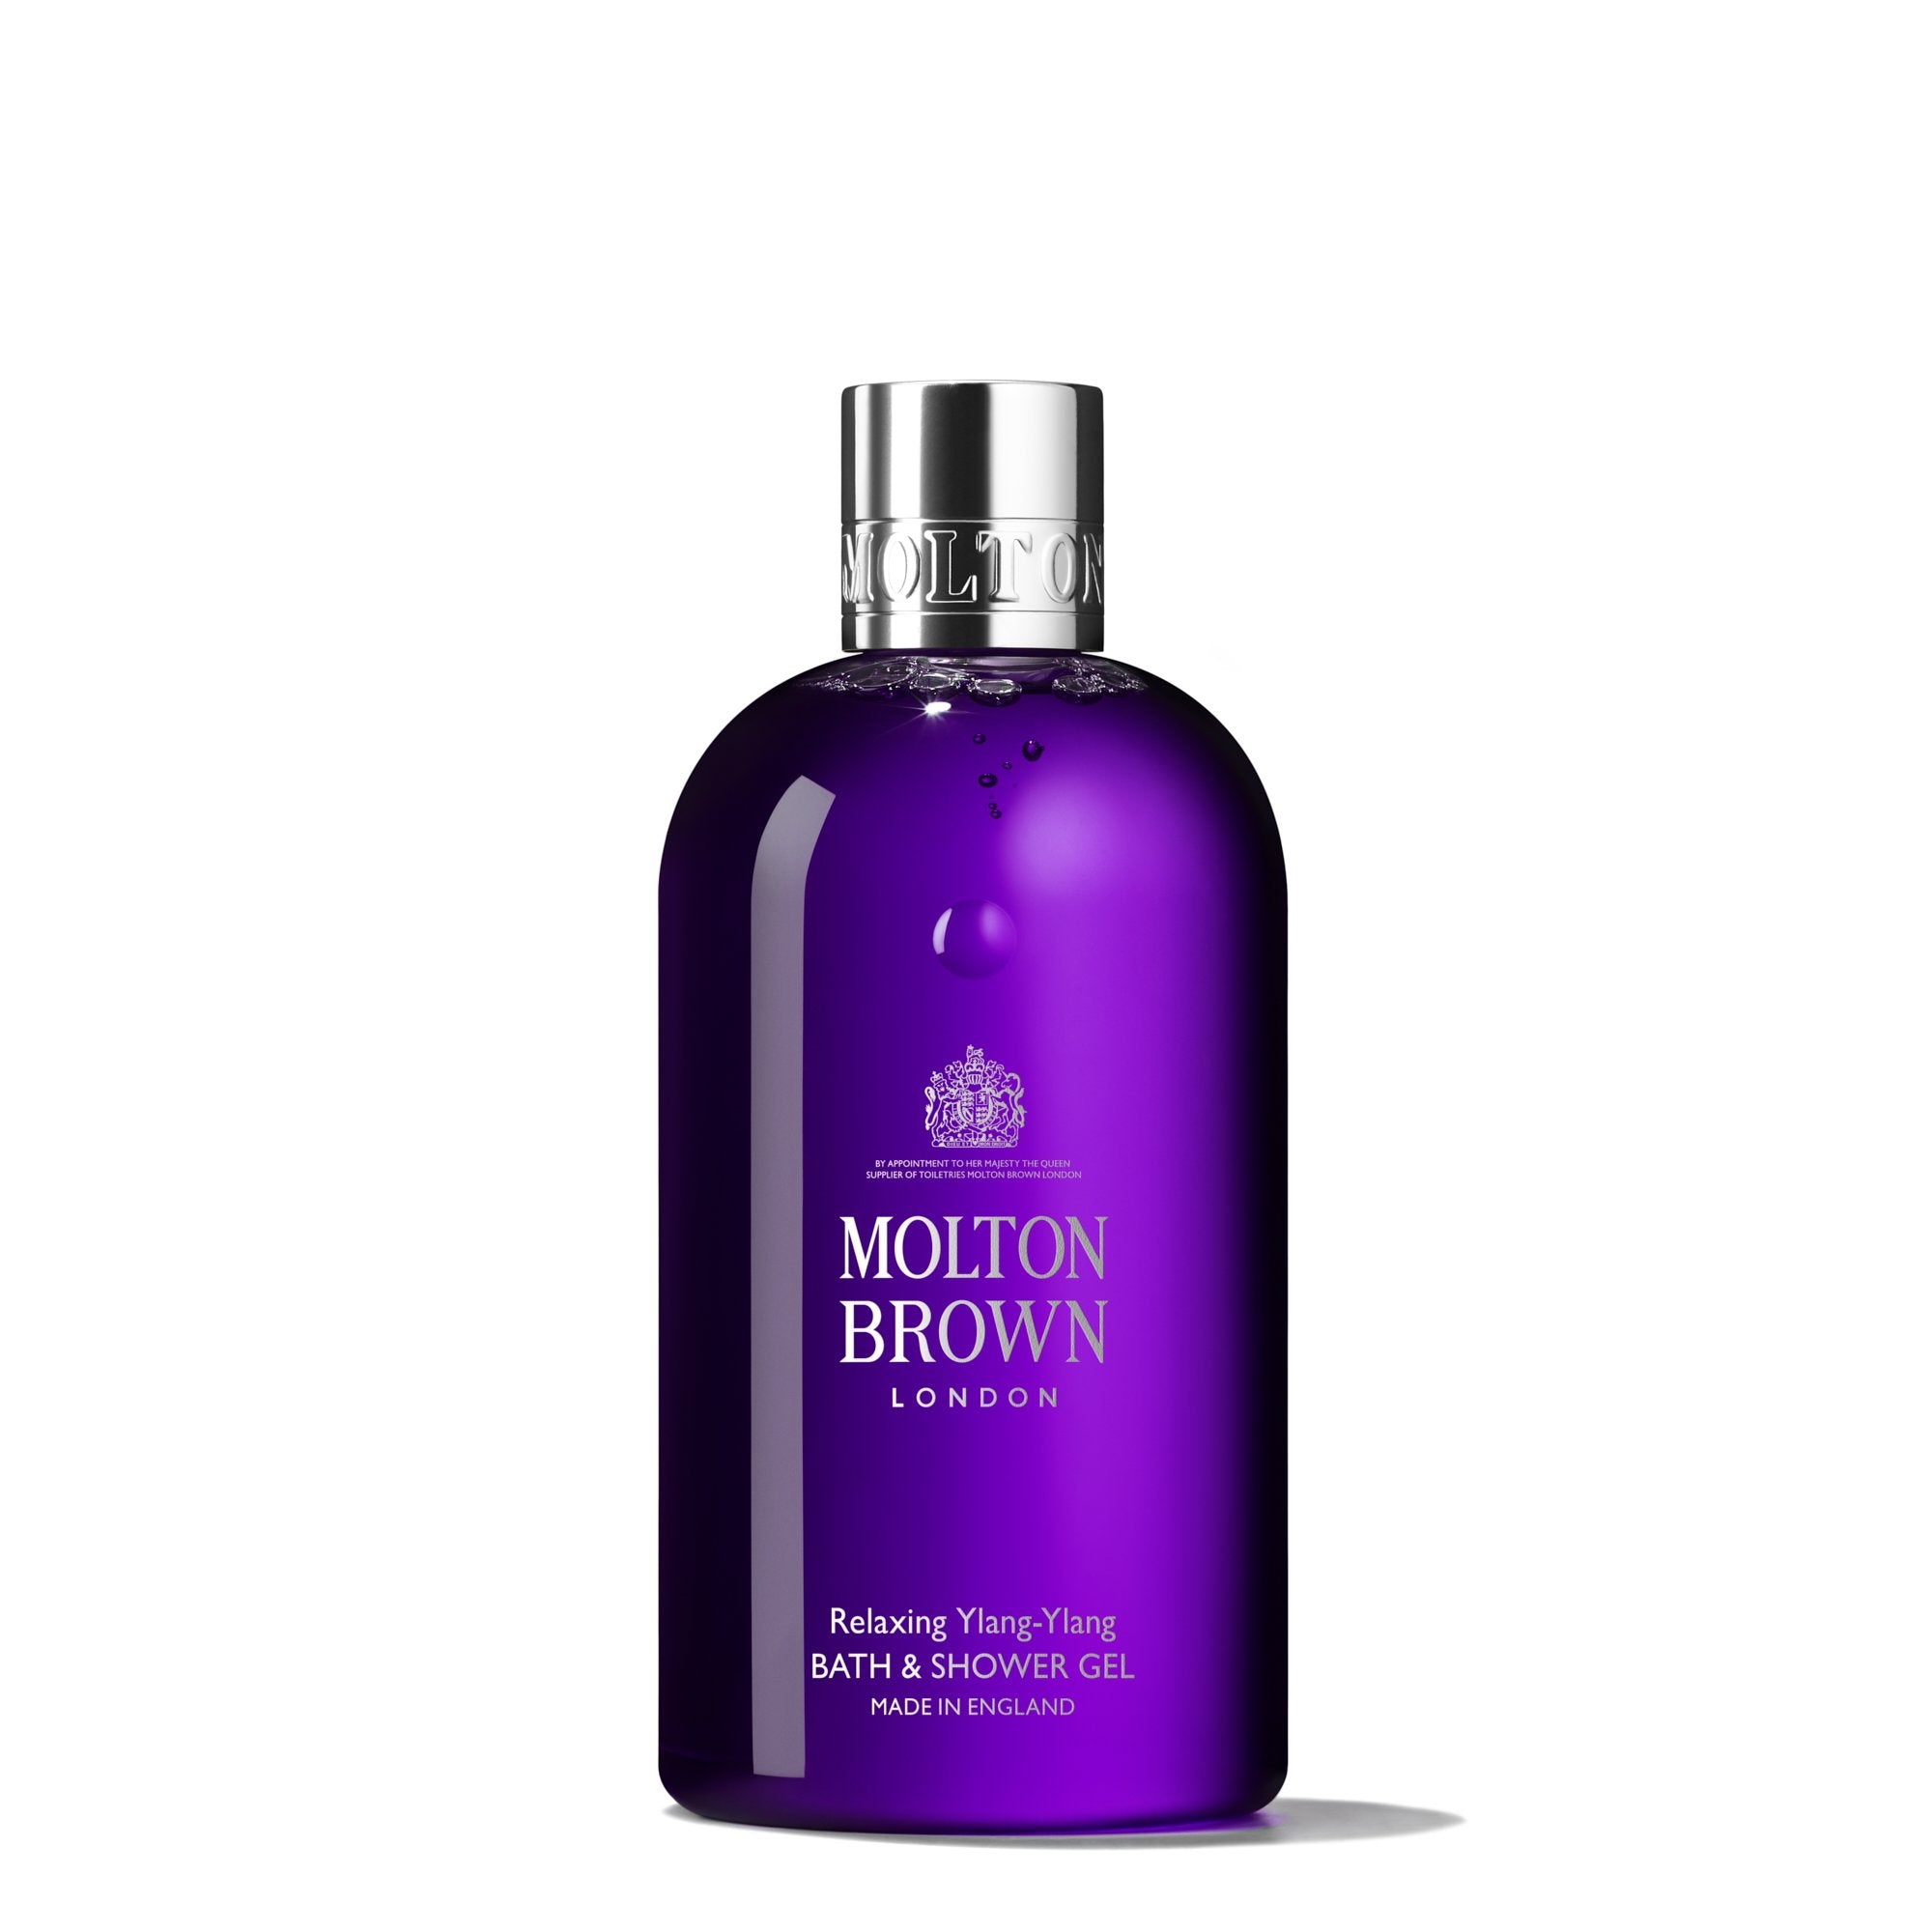 Molton Brown Relaxing Ylang-Ylang Bath & Shower Gel, 300ml